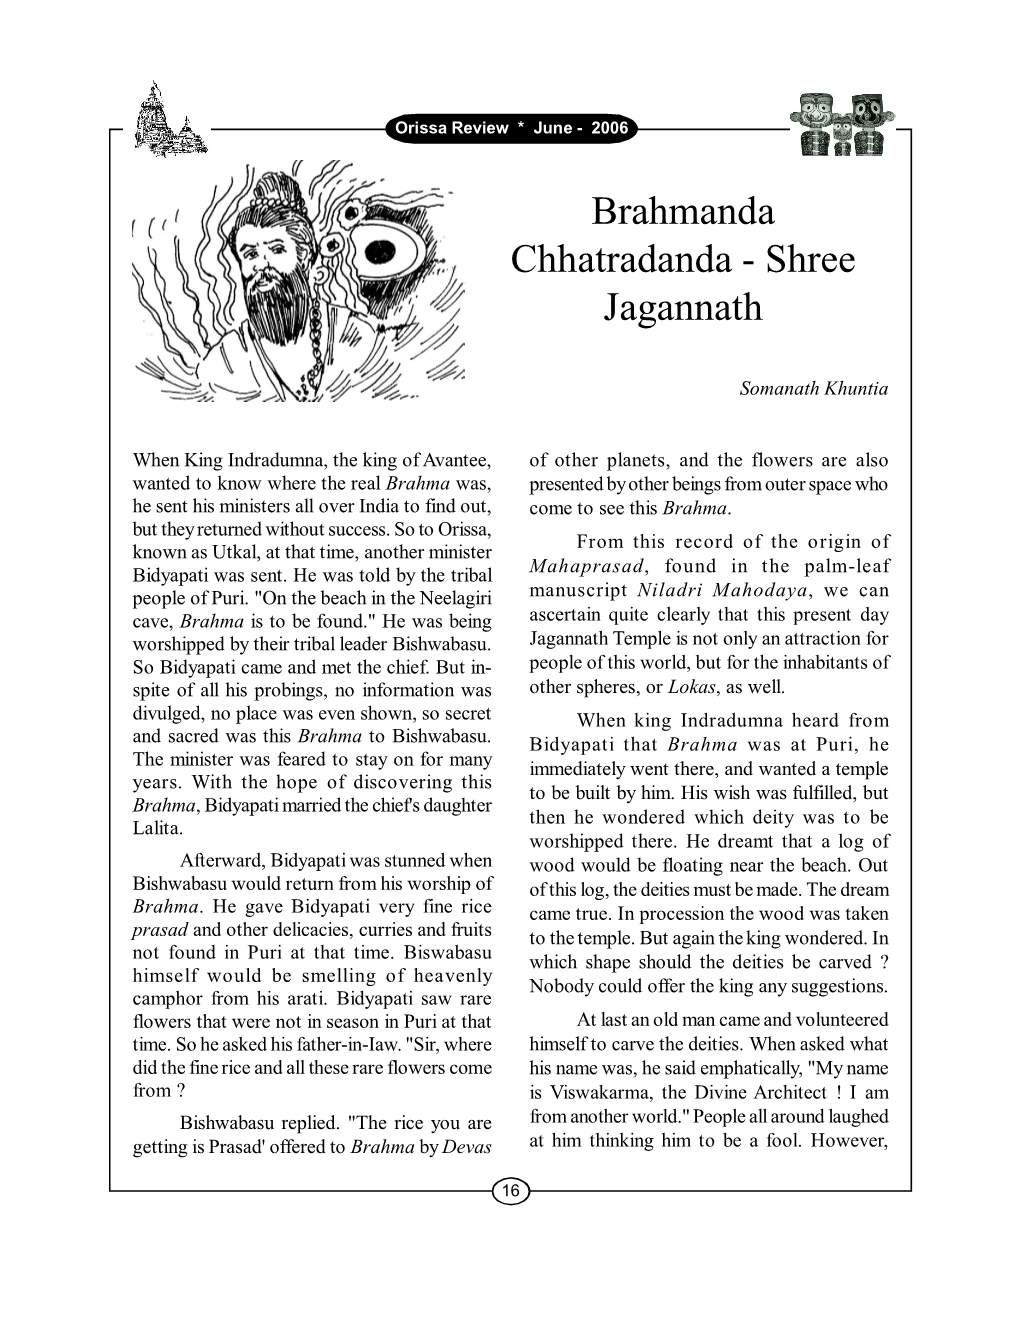 Brahmanda Chhatradanda - Shree Jagannath